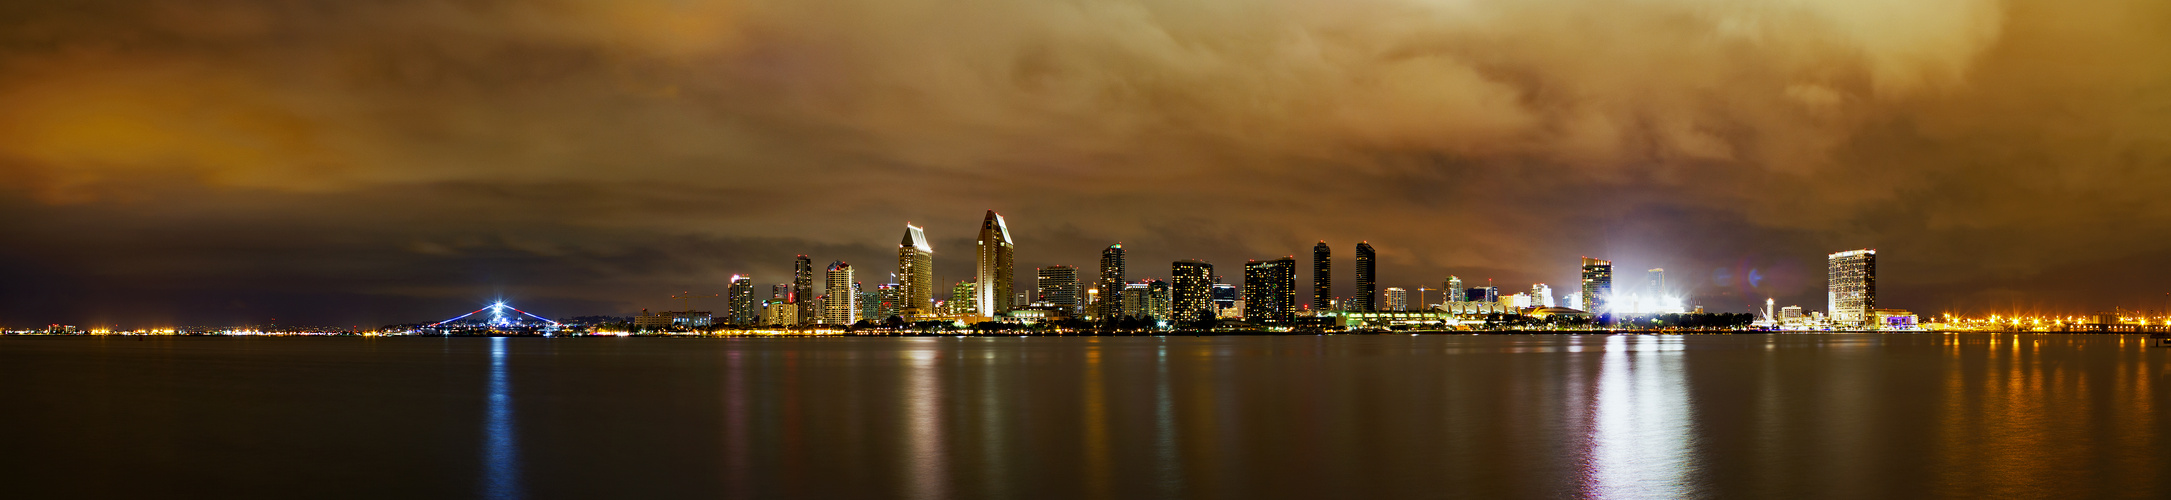 San Diego at Night V1